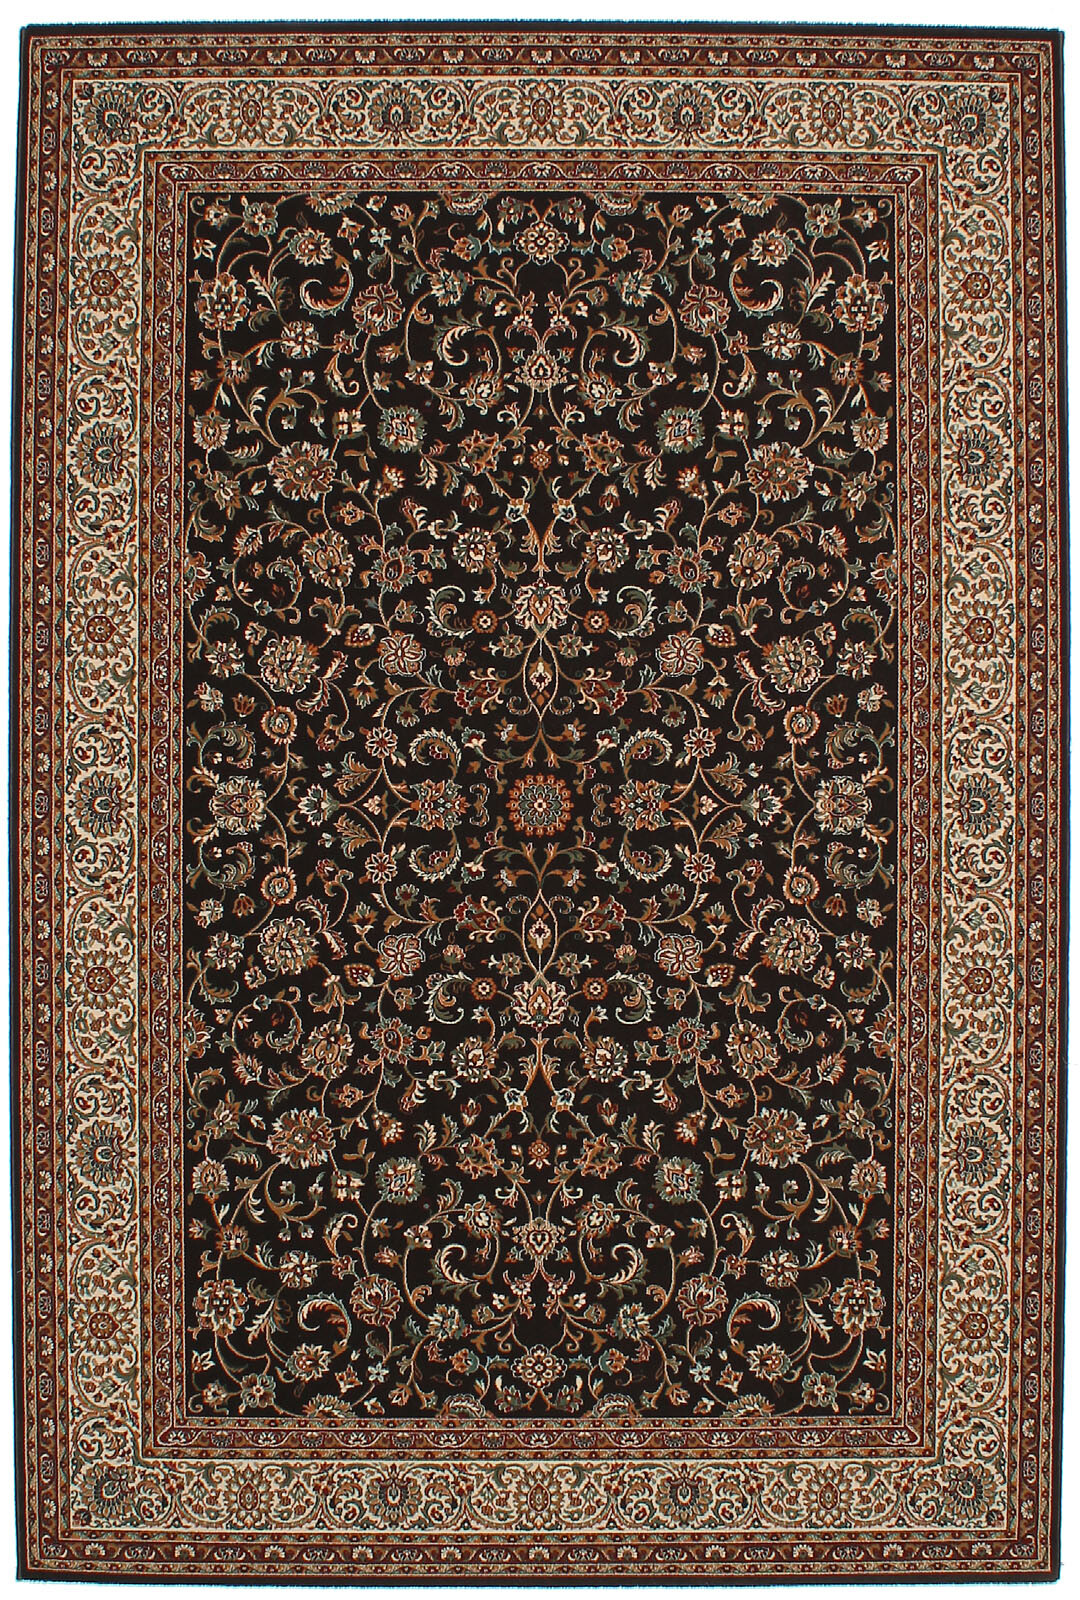 Шерстяной ковер Farsistan 5604-702 brown